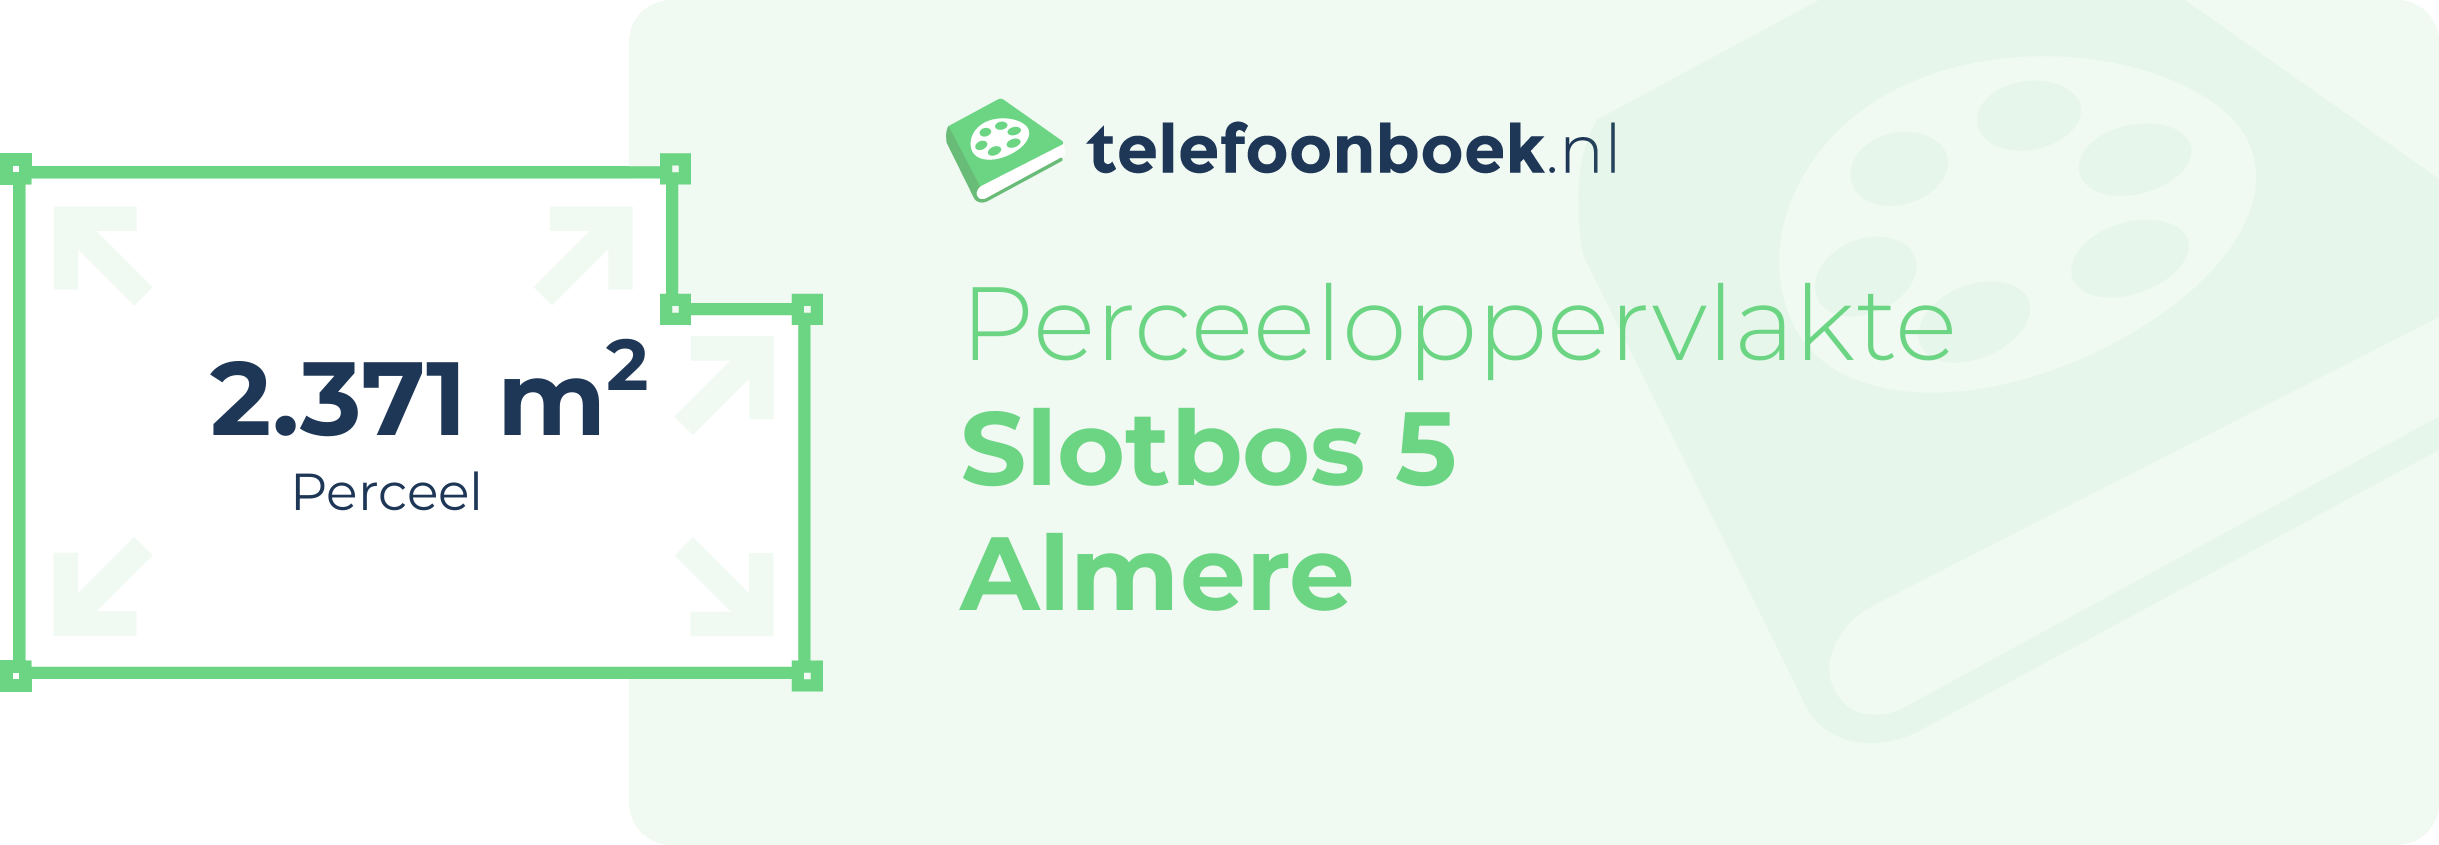 Perceeloppervlakte Slotbos 5 Almere